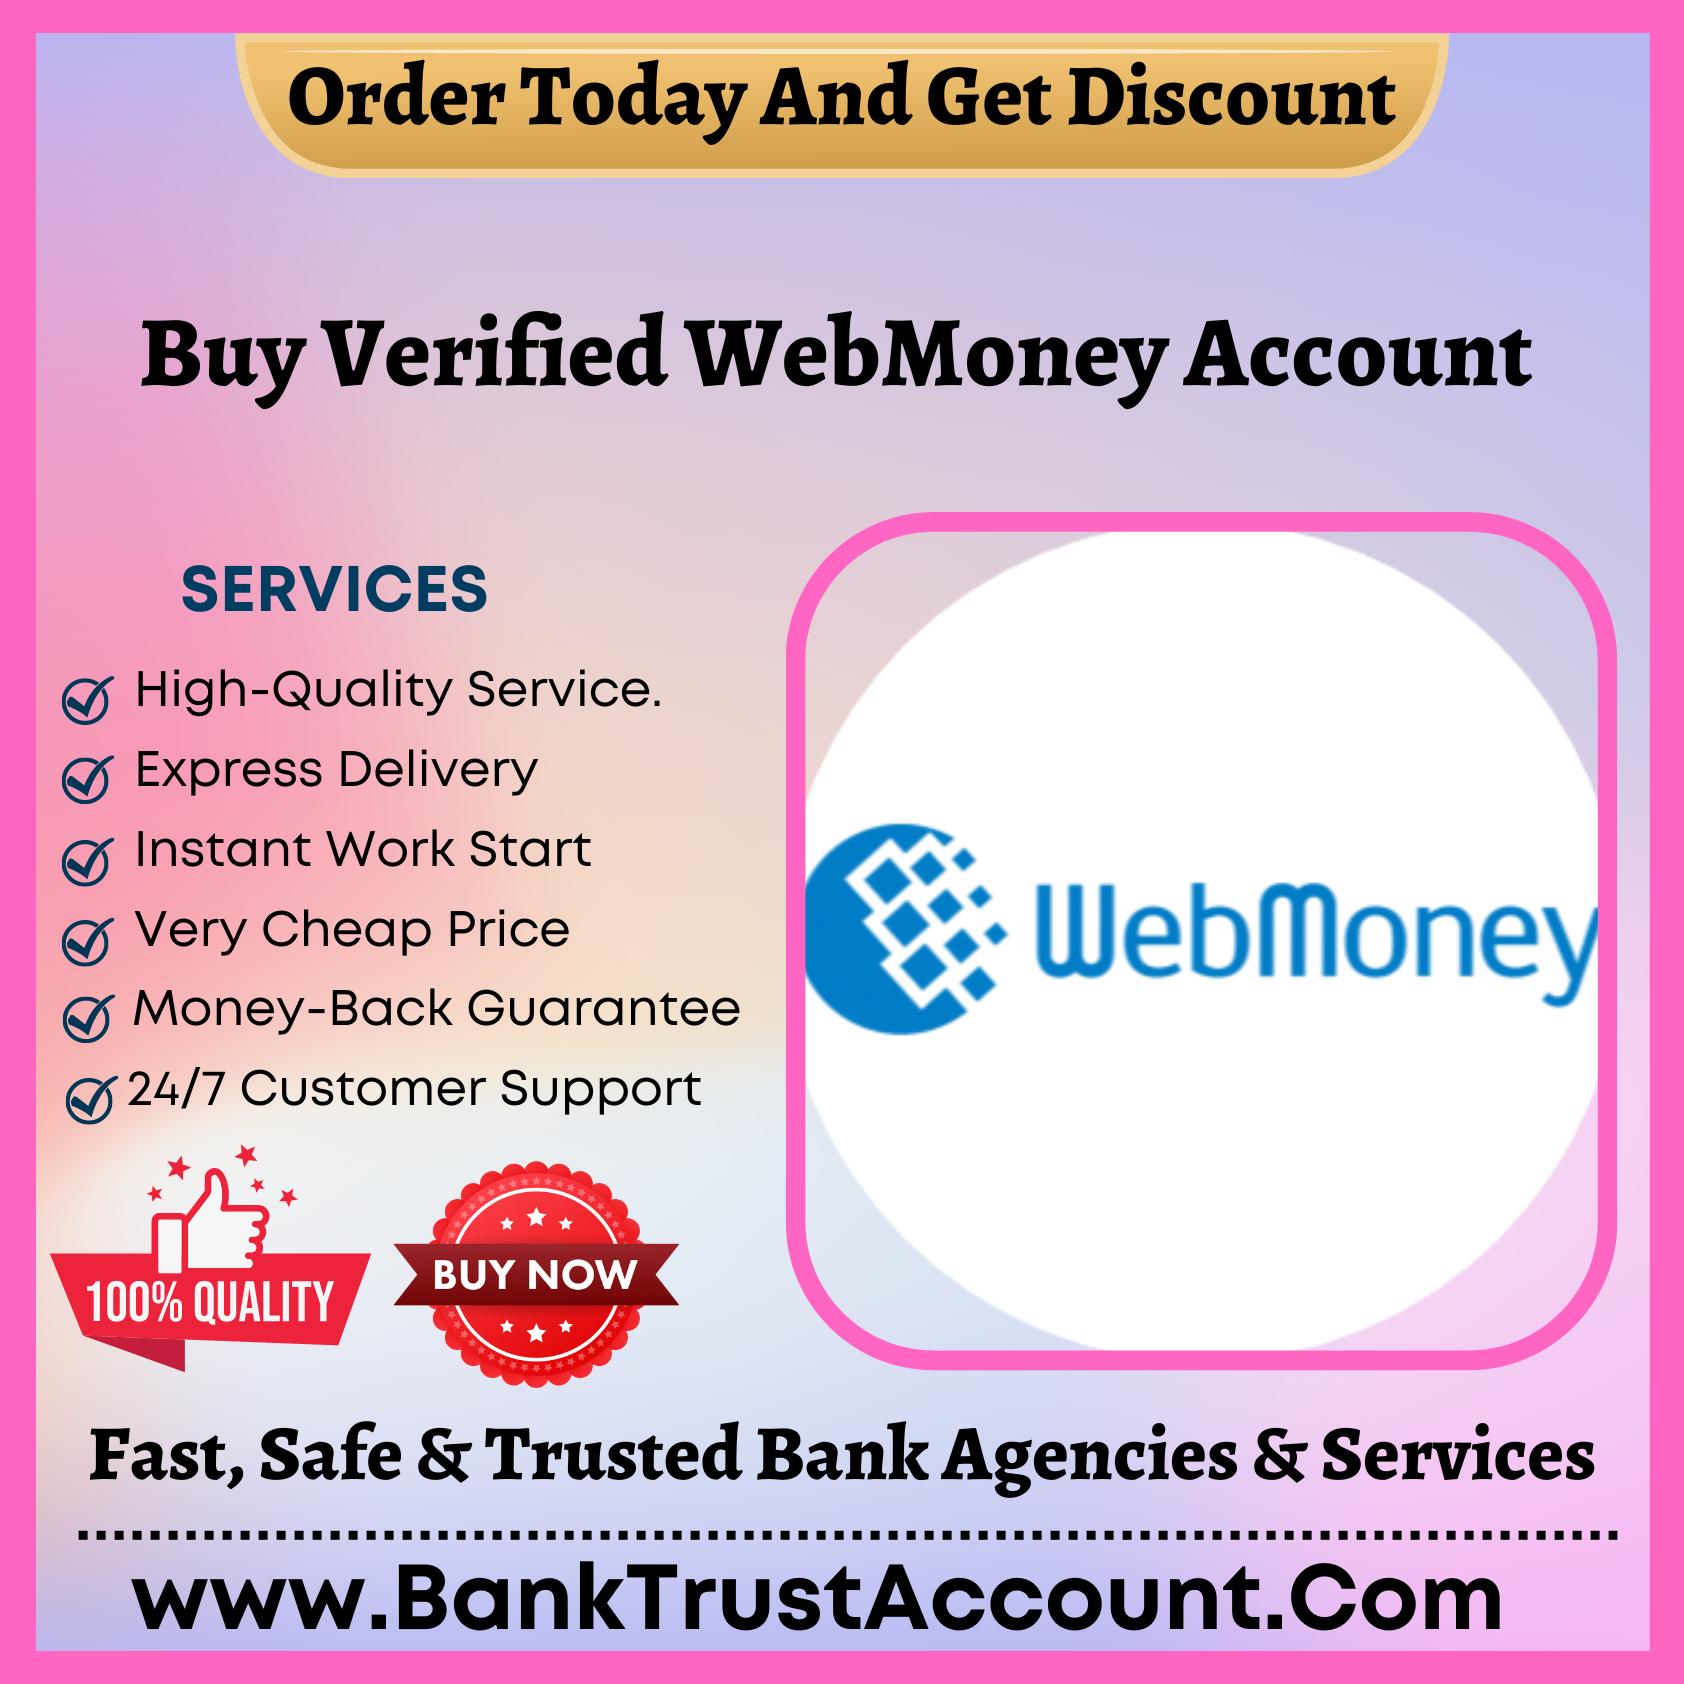 Buy Verified WebMoney Account - With KYC Documents Verified - BankTrustAccount